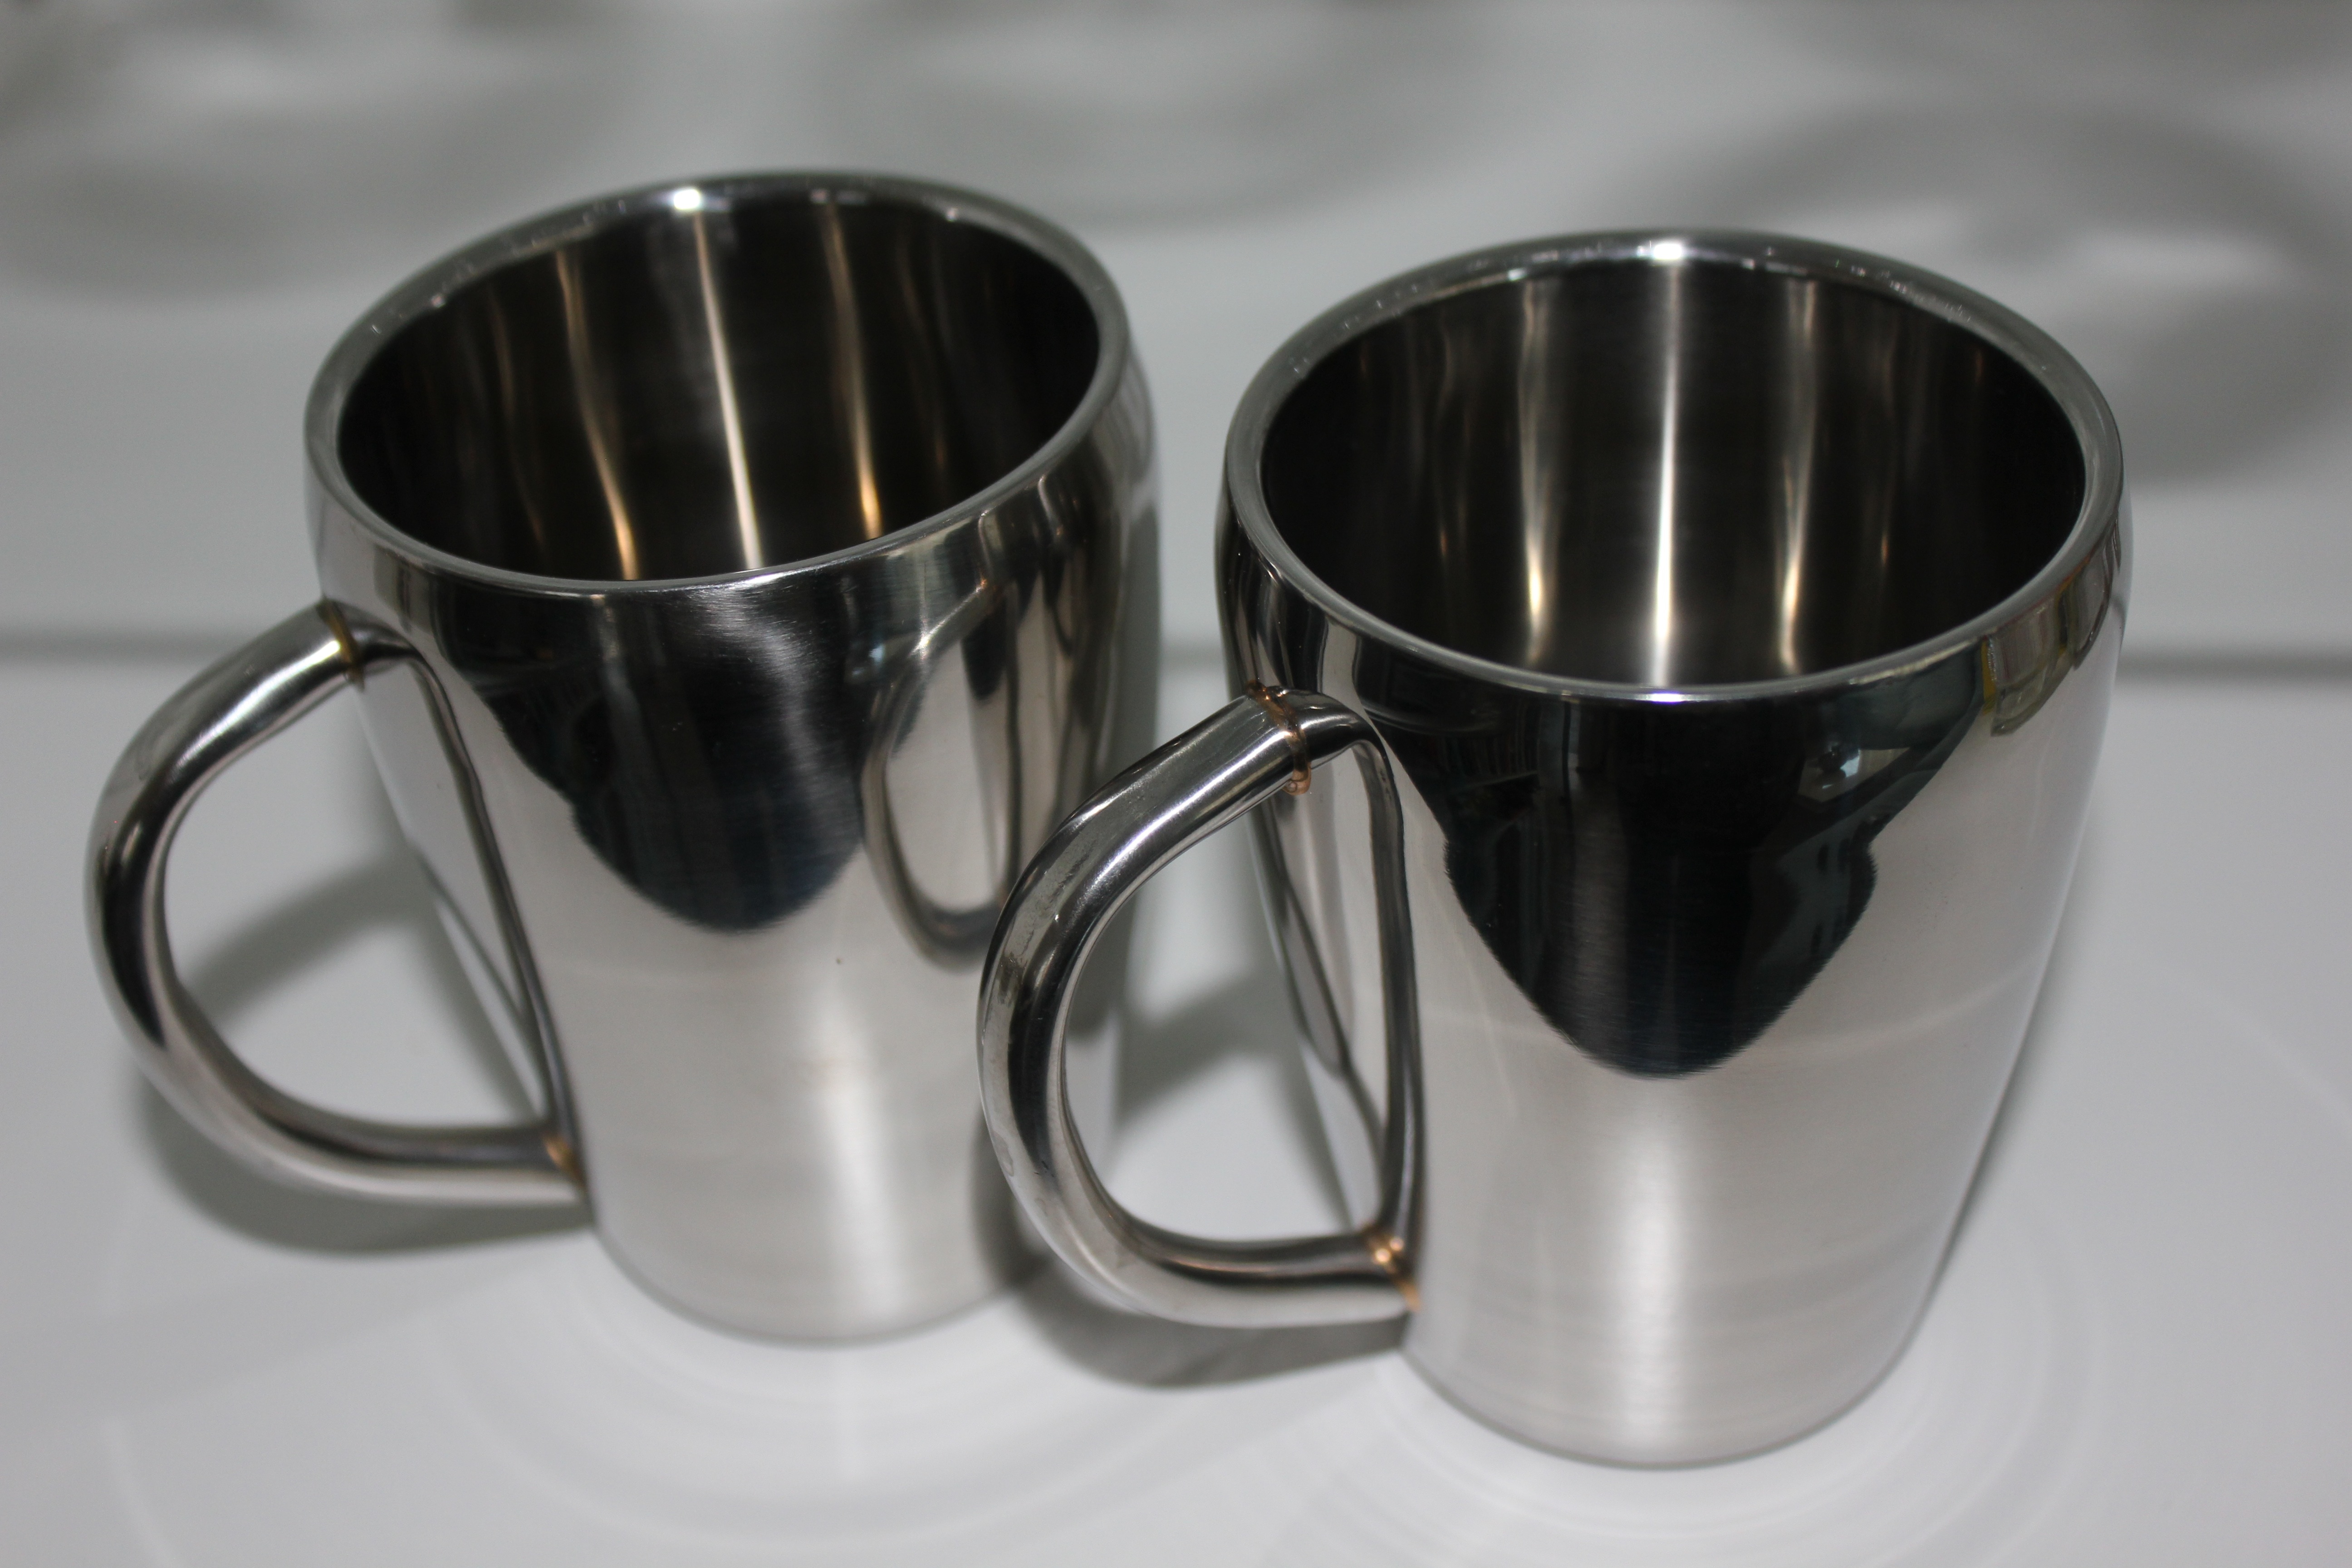 2 stainless steel mugs